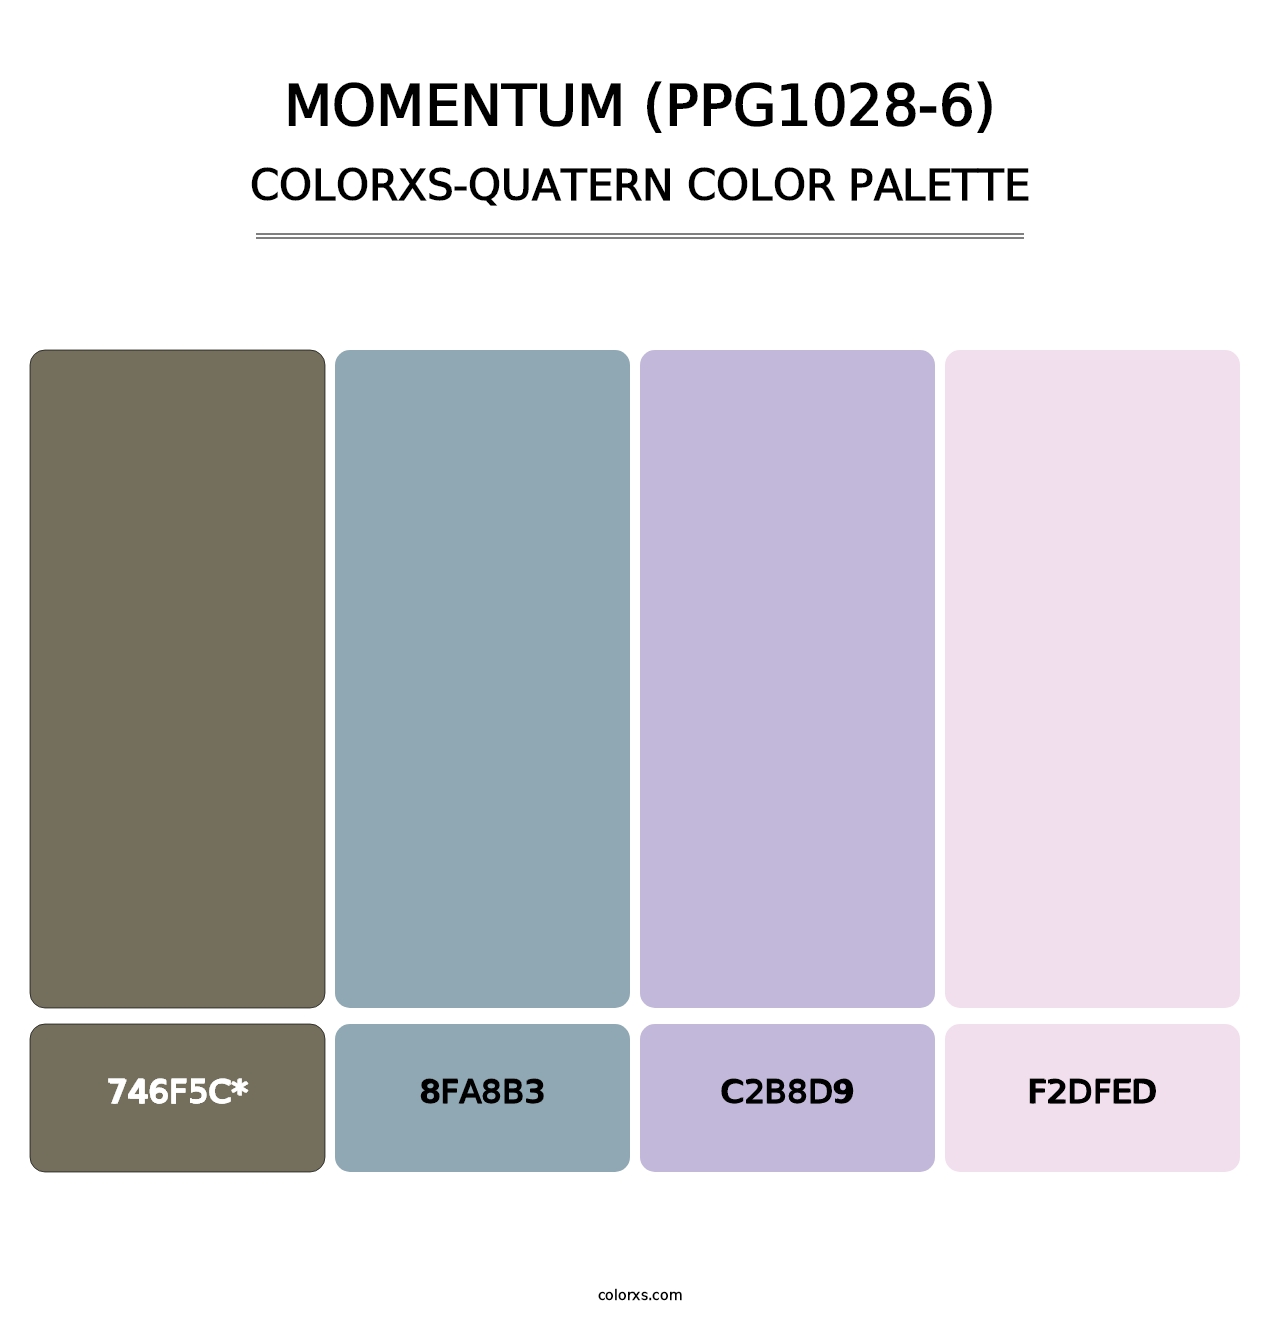 Momentum (PPG1028-6) - Colorxs Quatern Palette